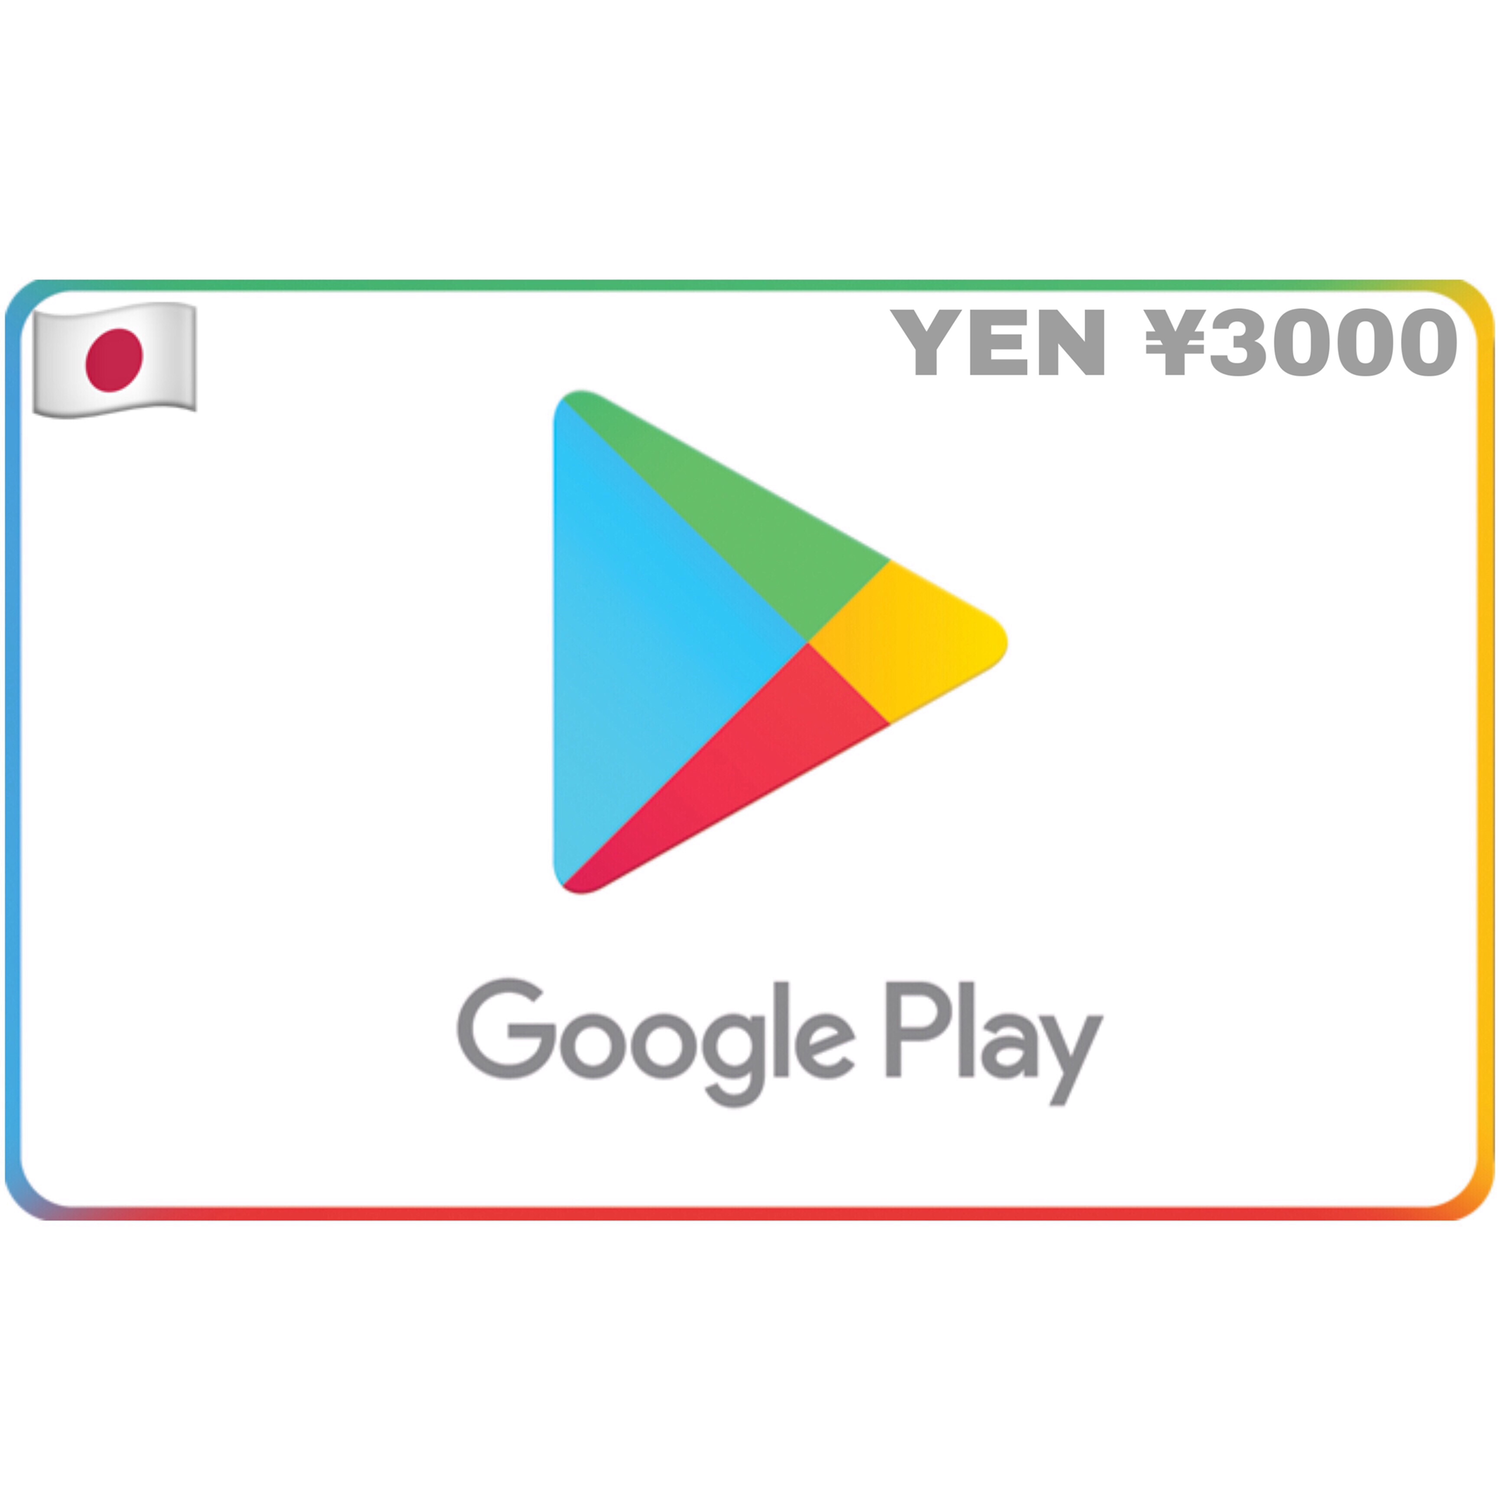 Google Play Japan ¥3000 YEN